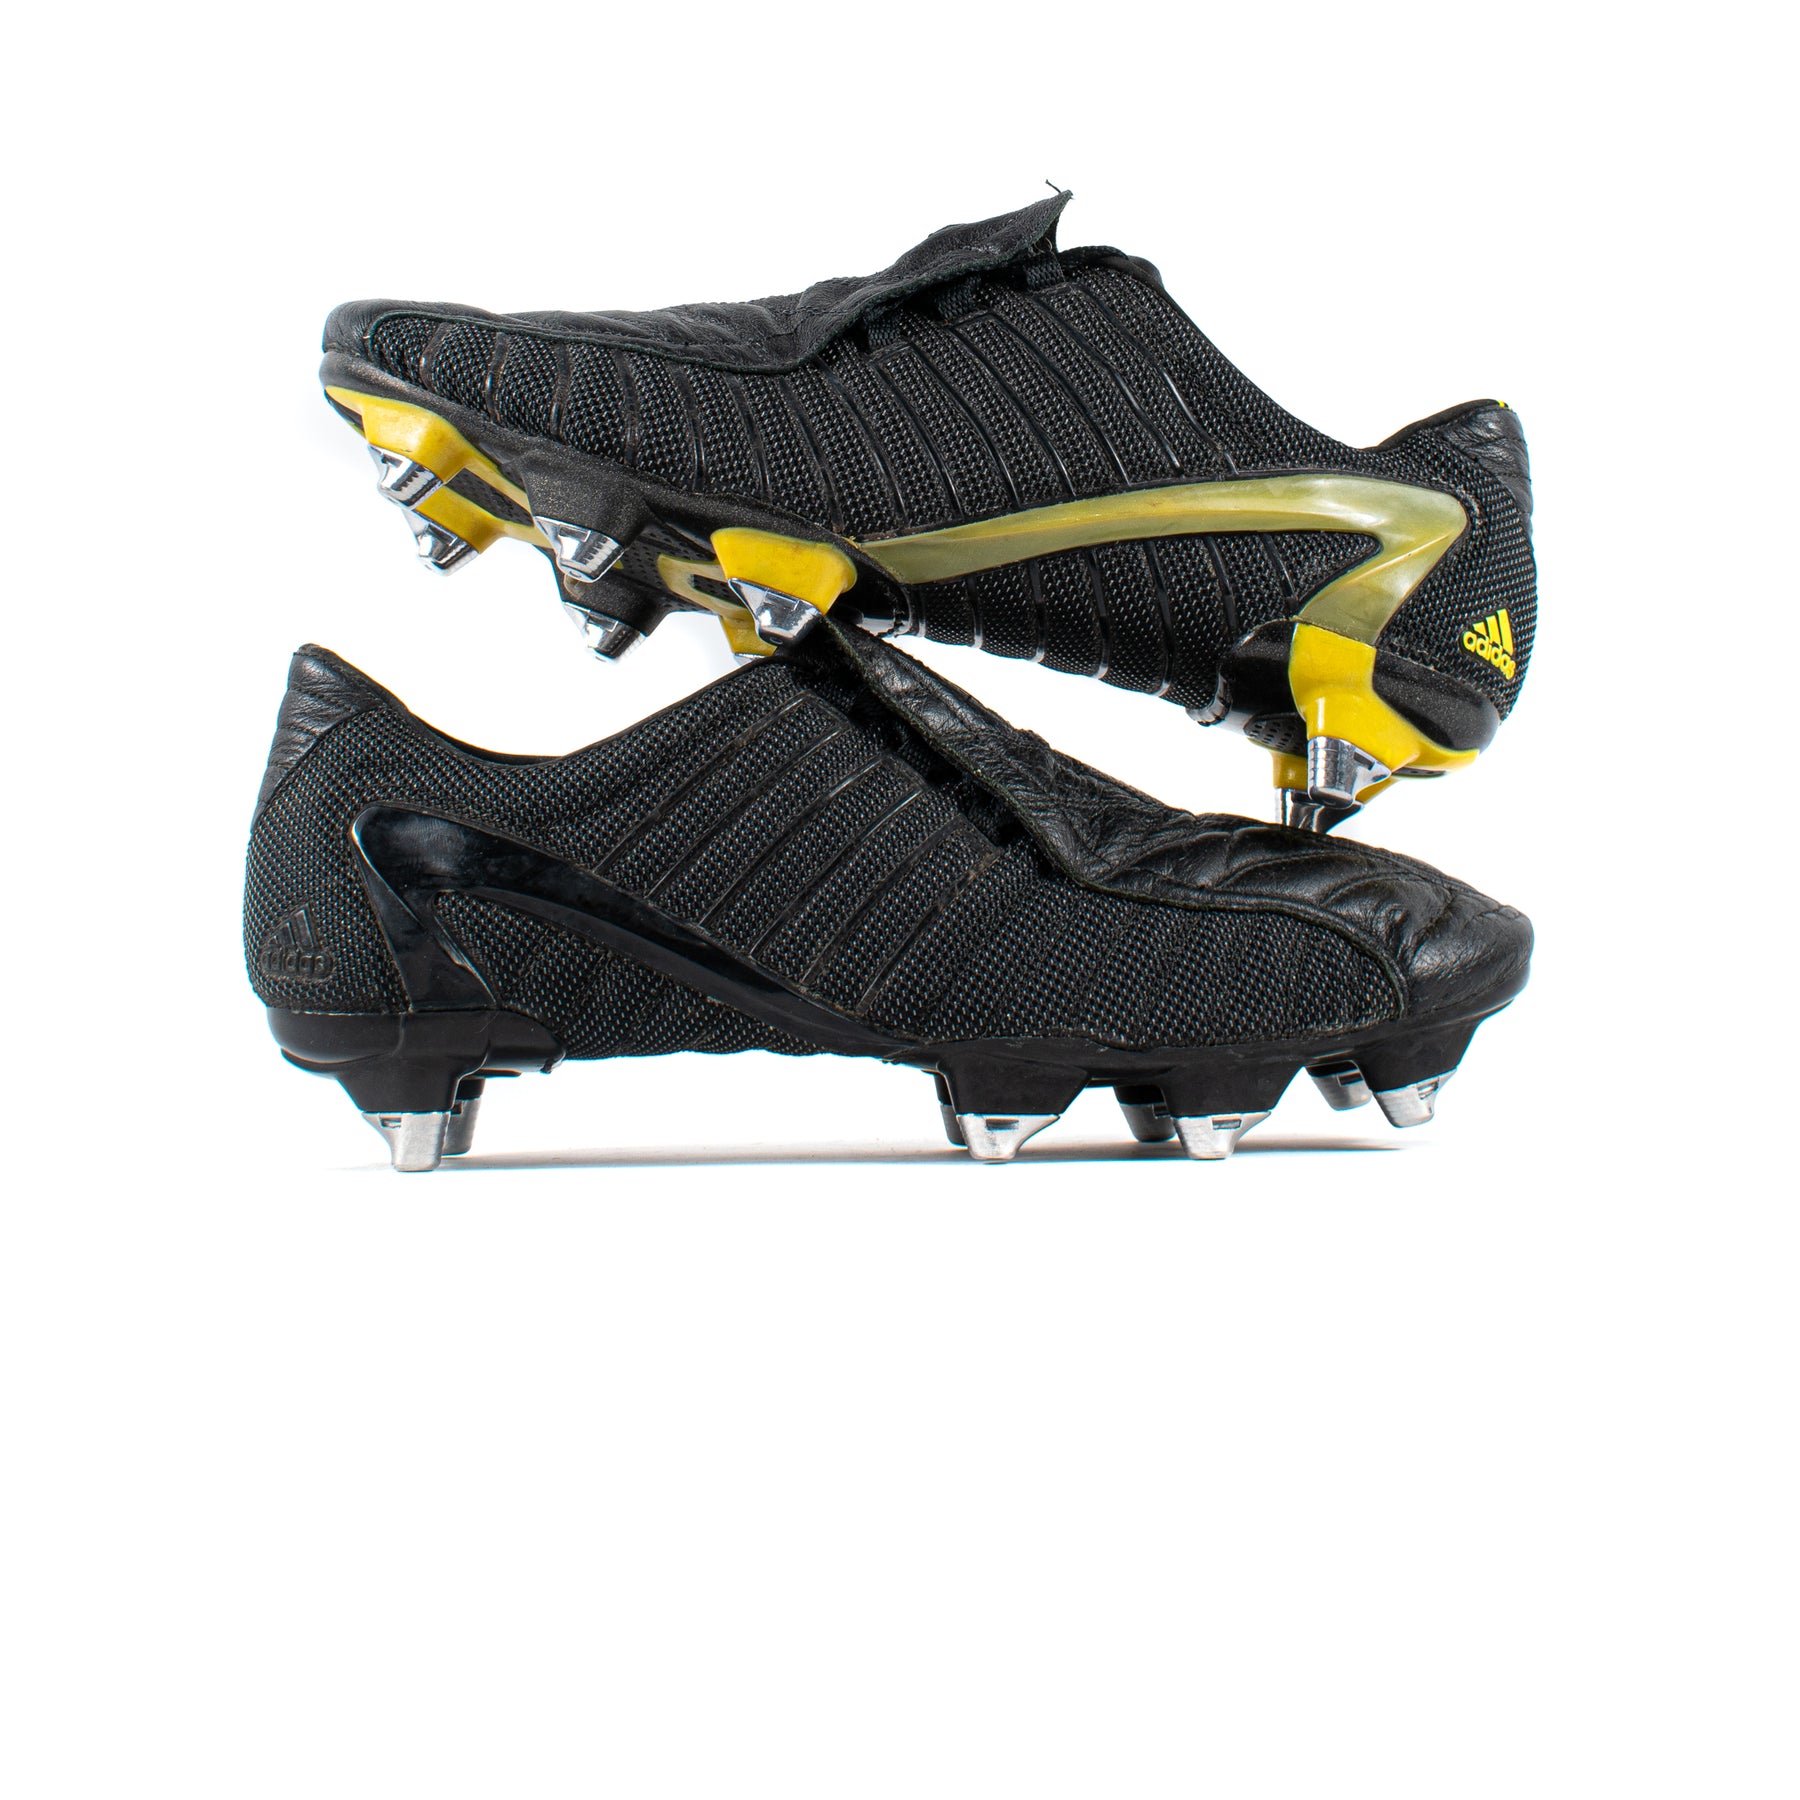 Adidas TRX Sample SG – Classic Soccer